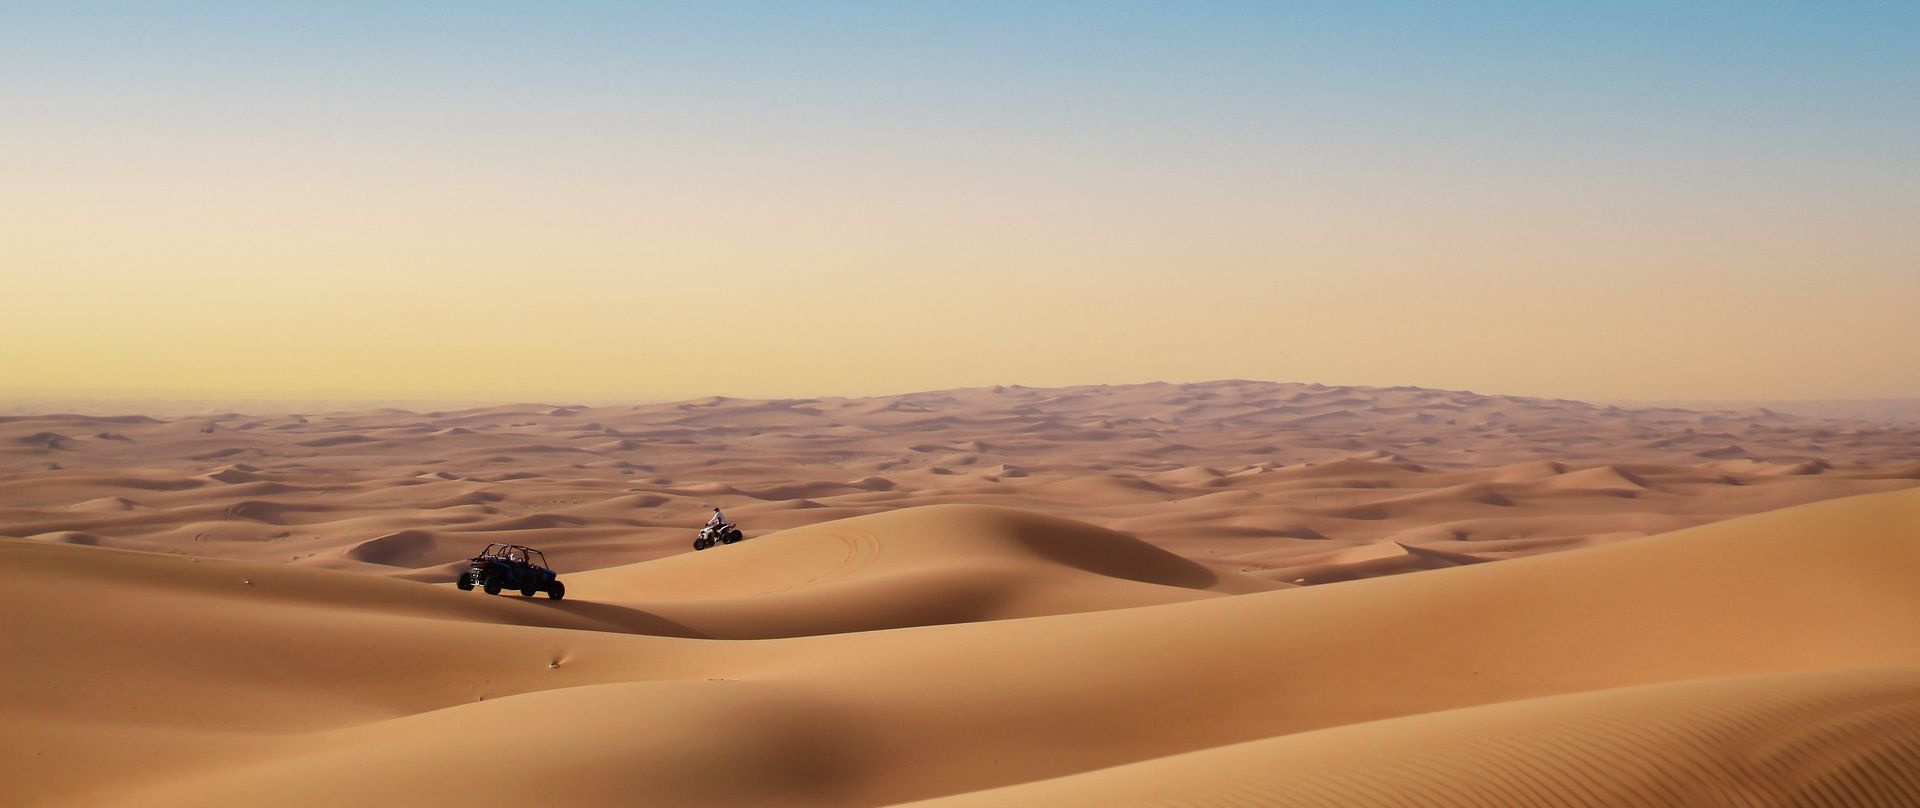 buggy in the desert